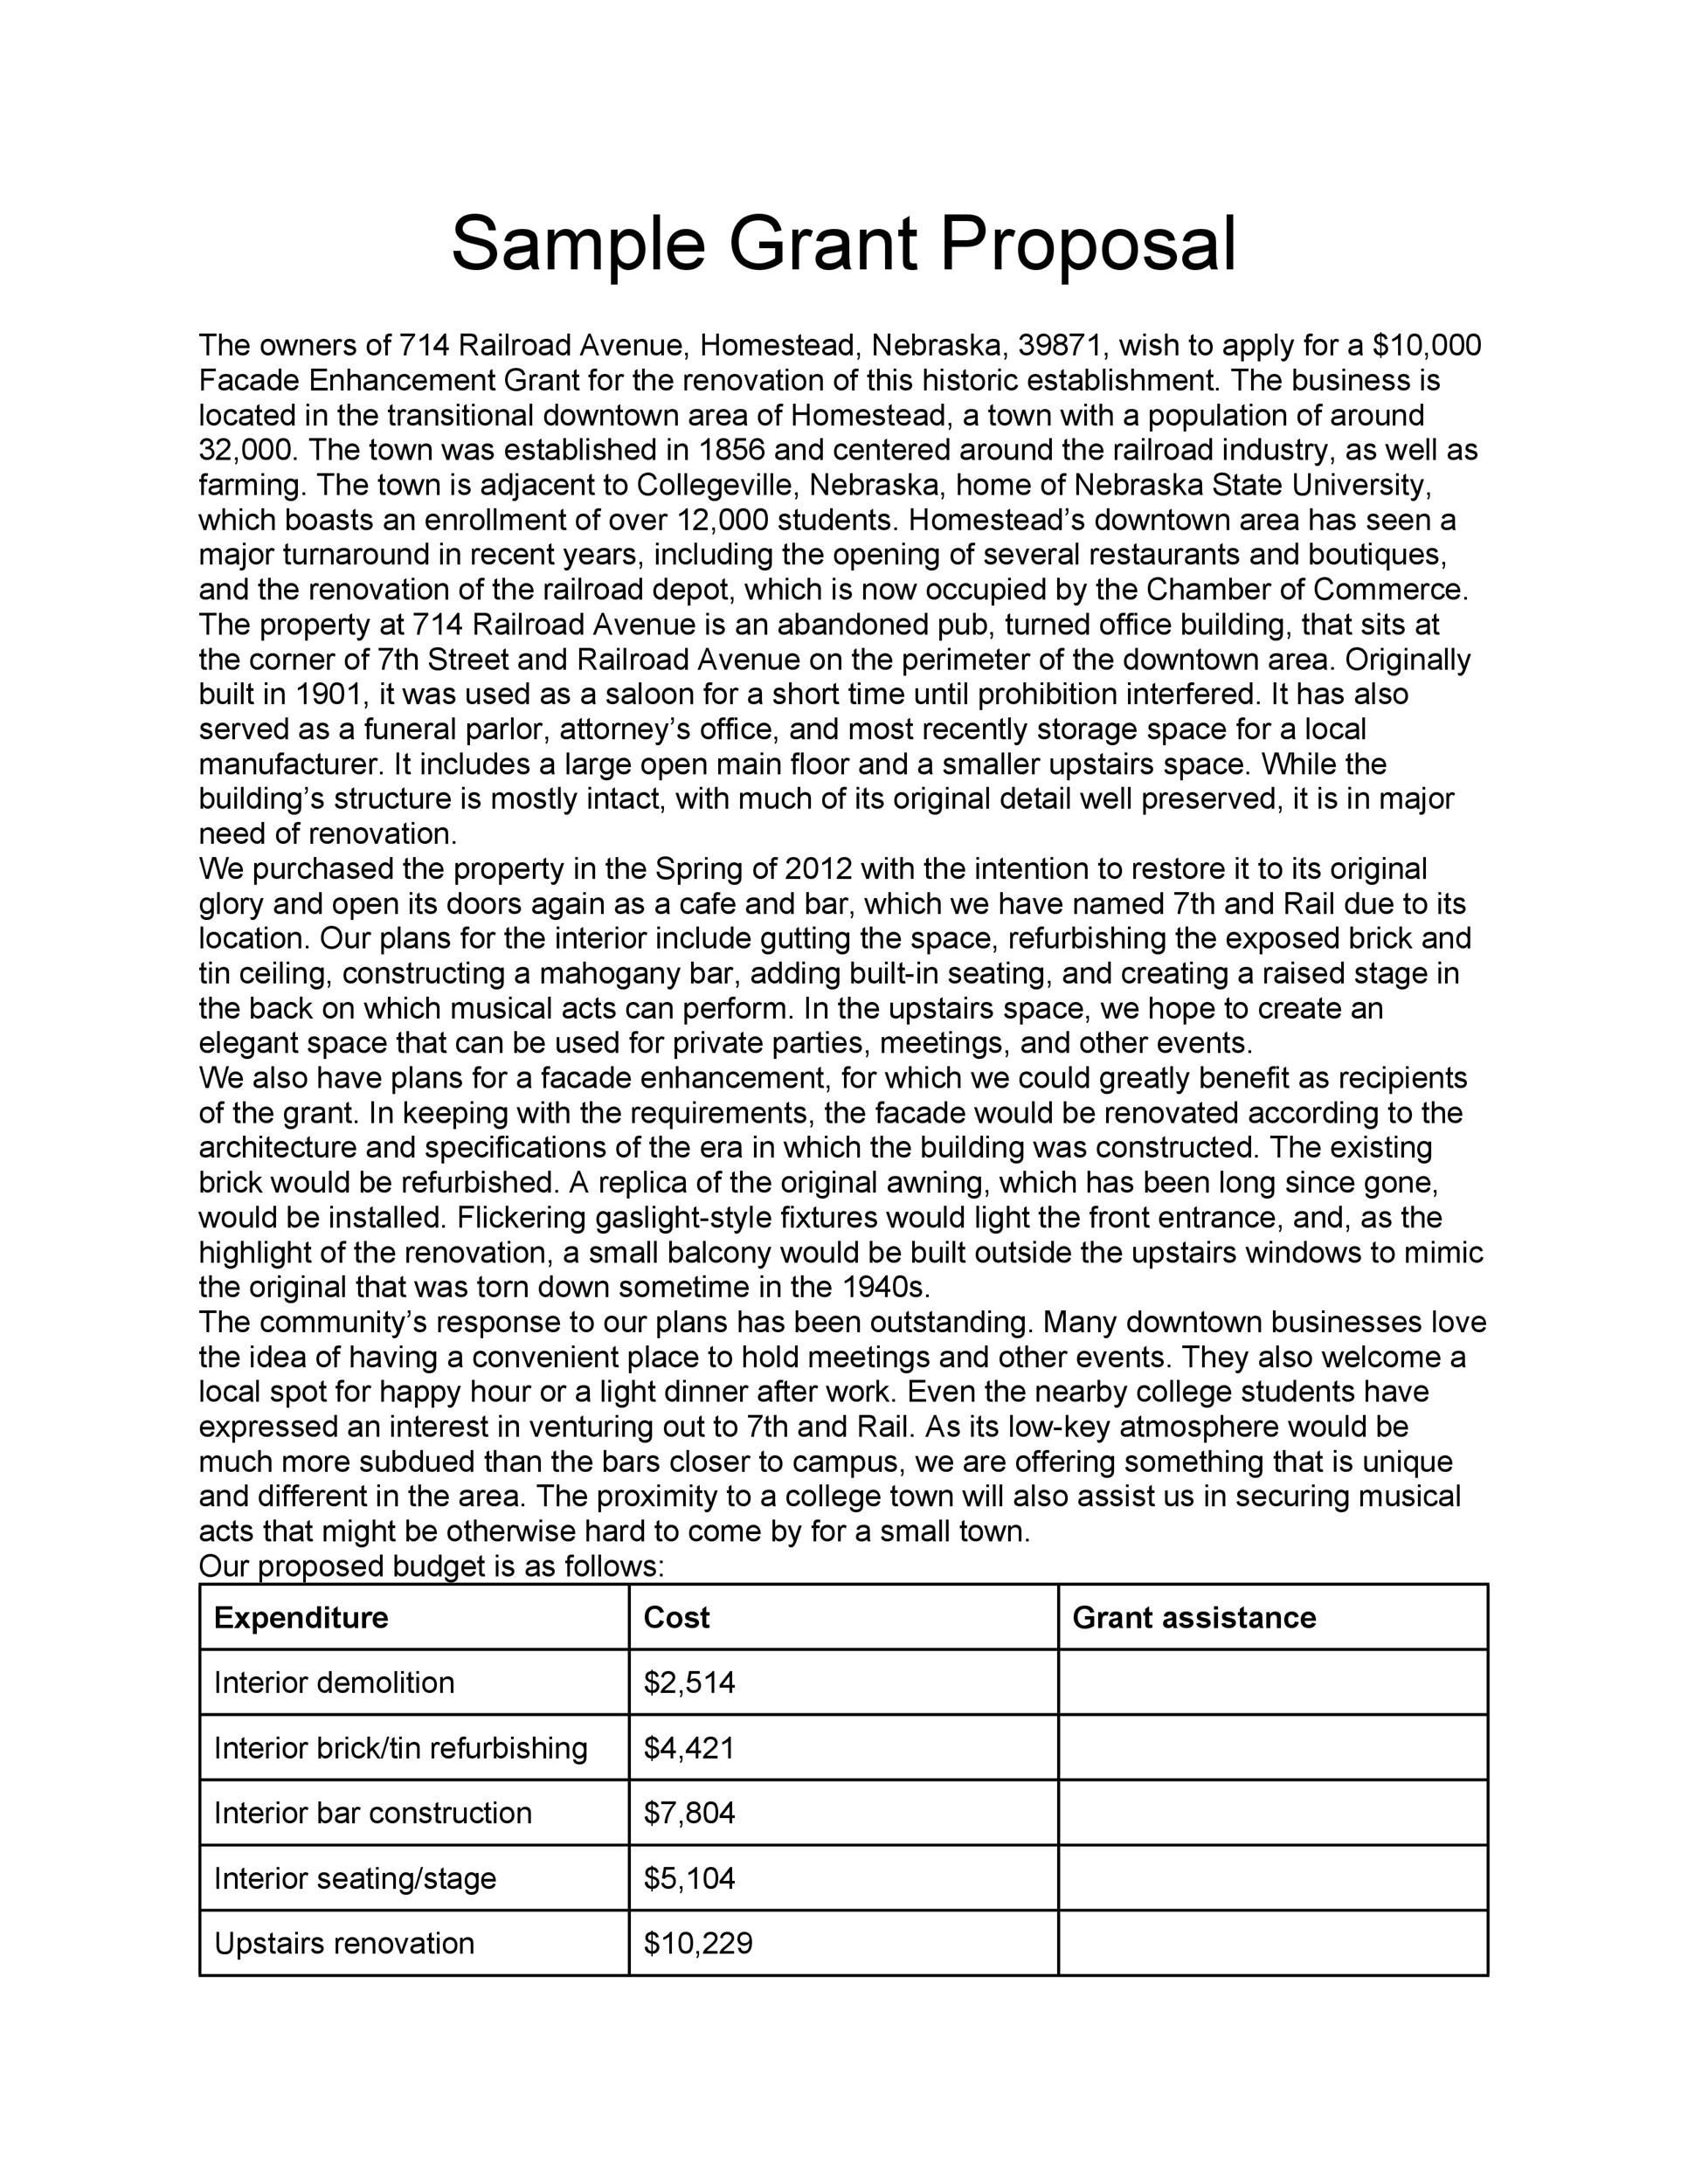 40-grant-proposal-templates-nsf-non-profit-research-templatelab